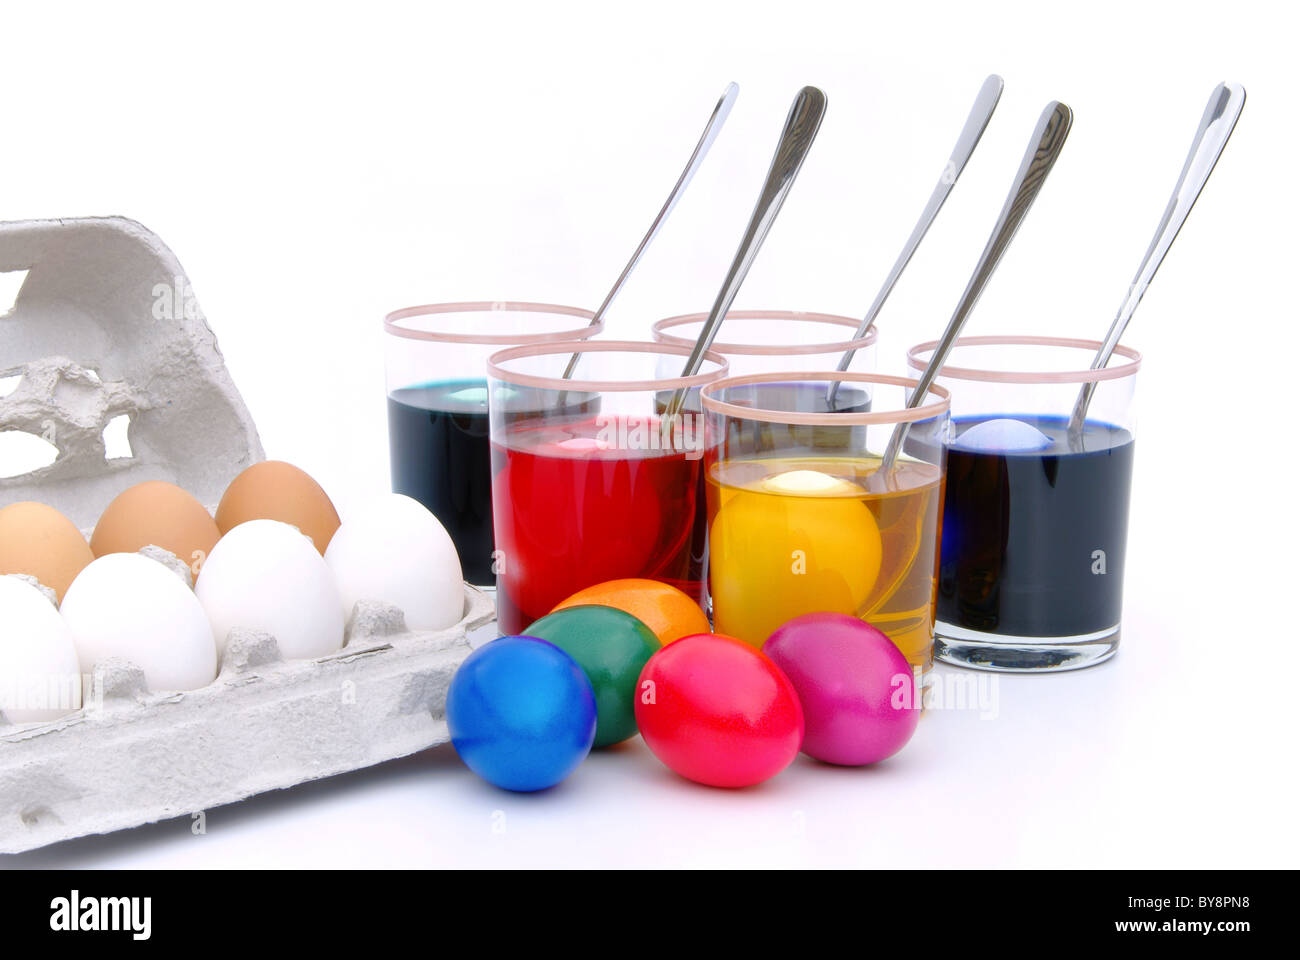 Ostereier färben - easter eggs colour 07 Stock Photo